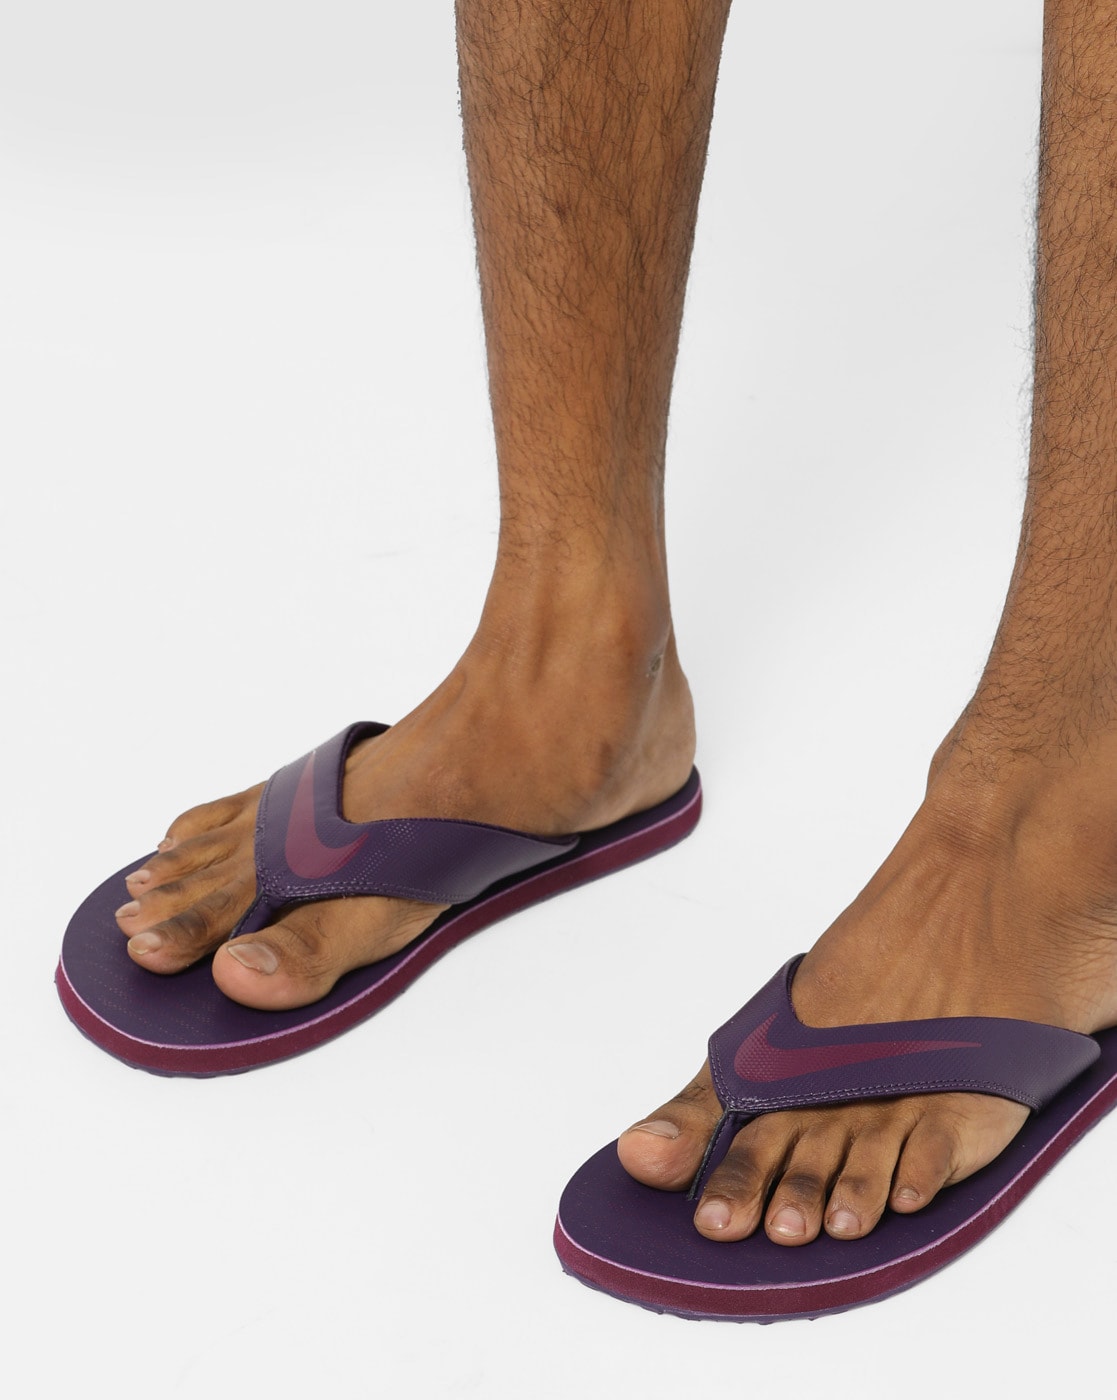 mens purple flip flops